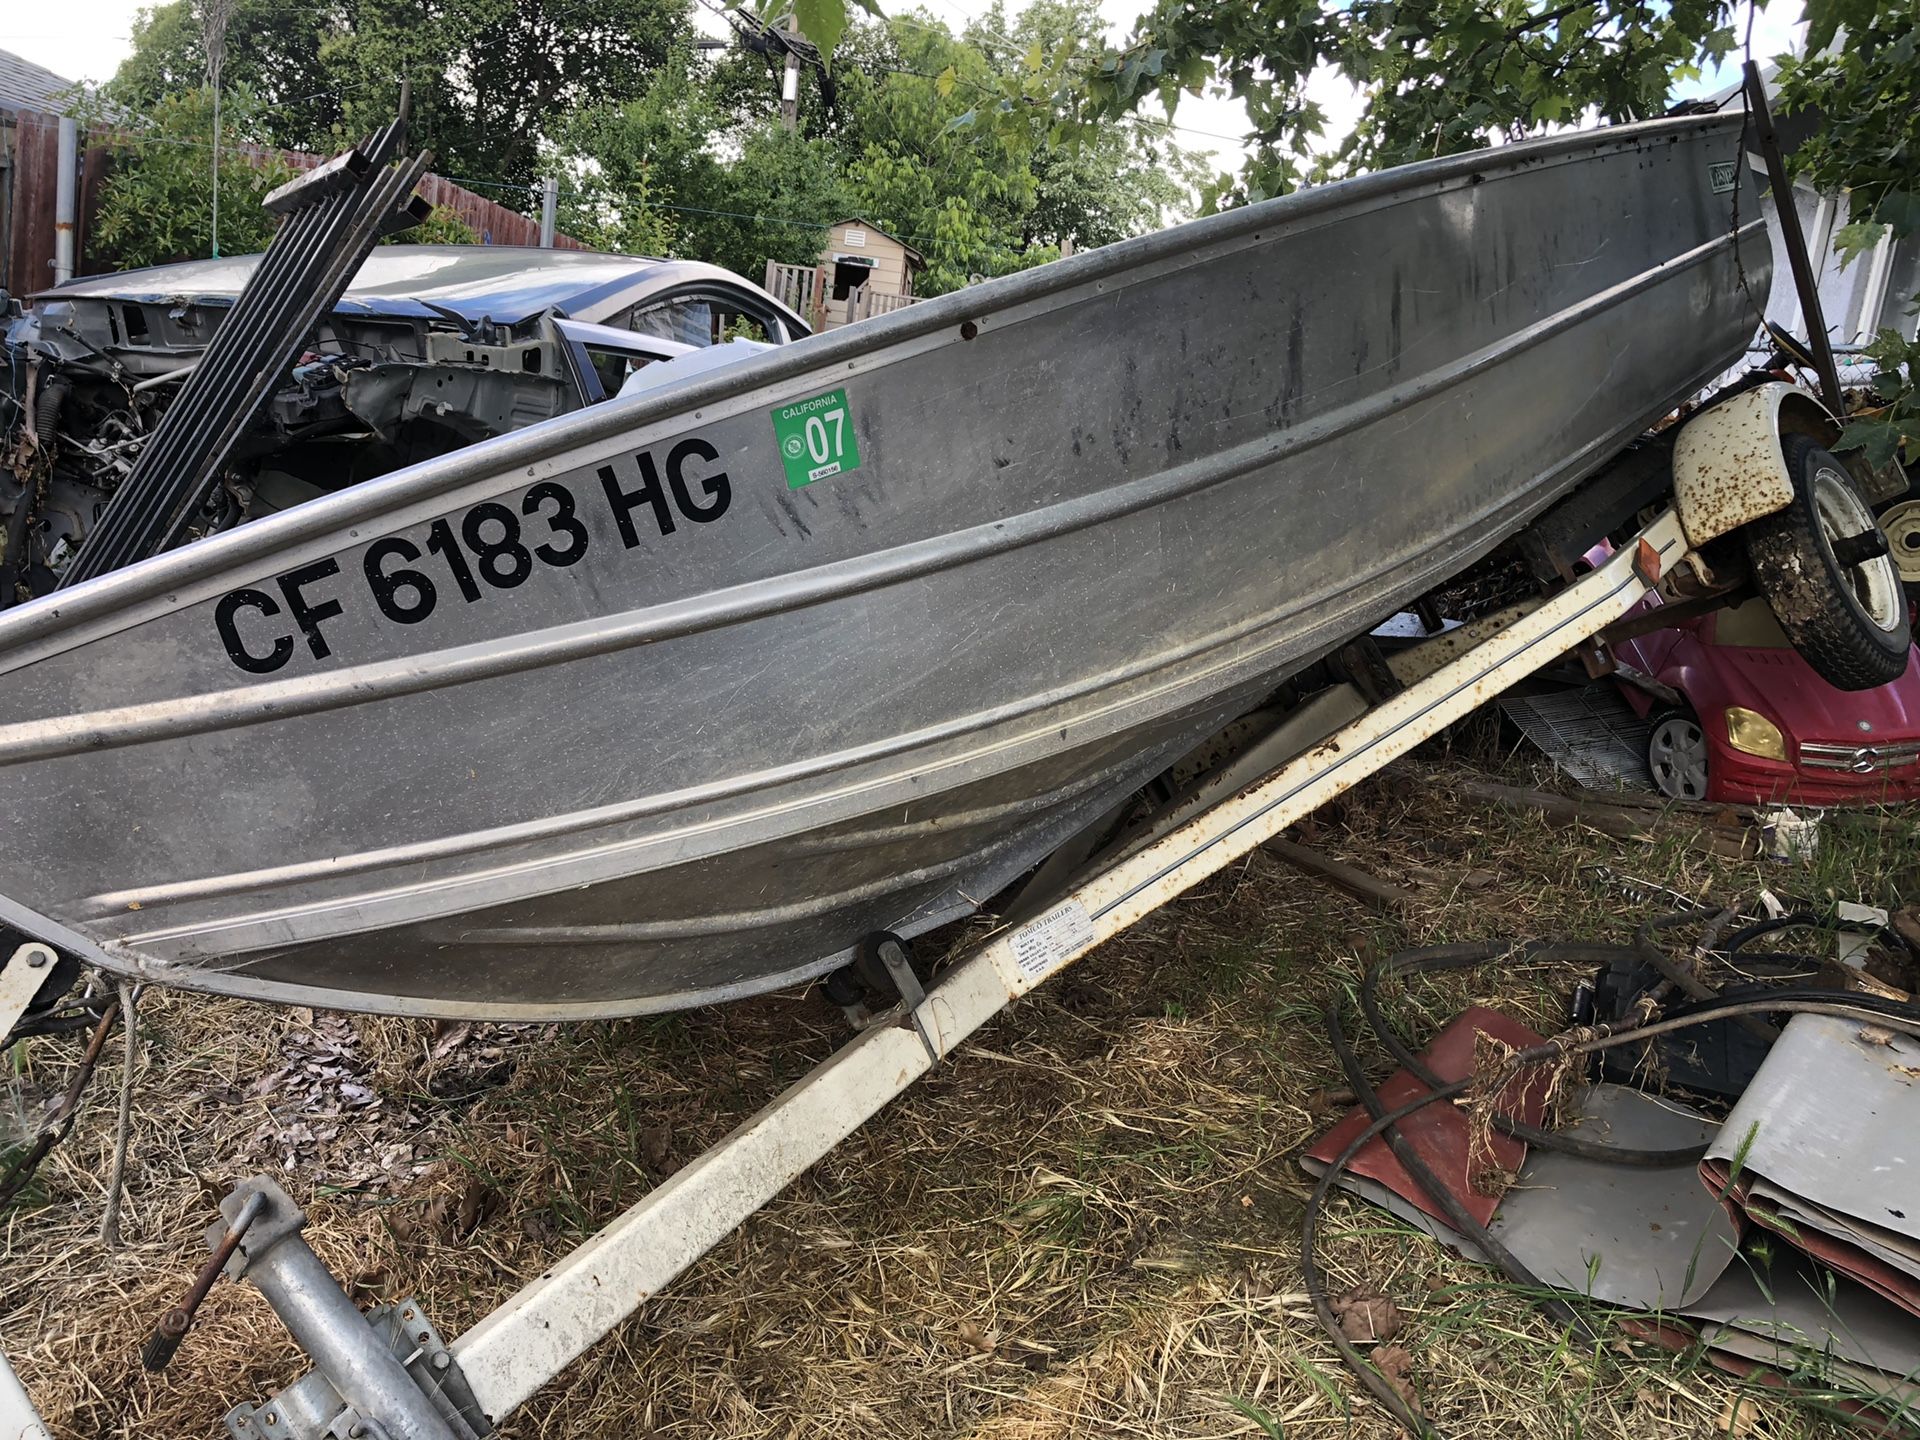 ~~~12’ Welded Aluminum Finish boat and trailer~~